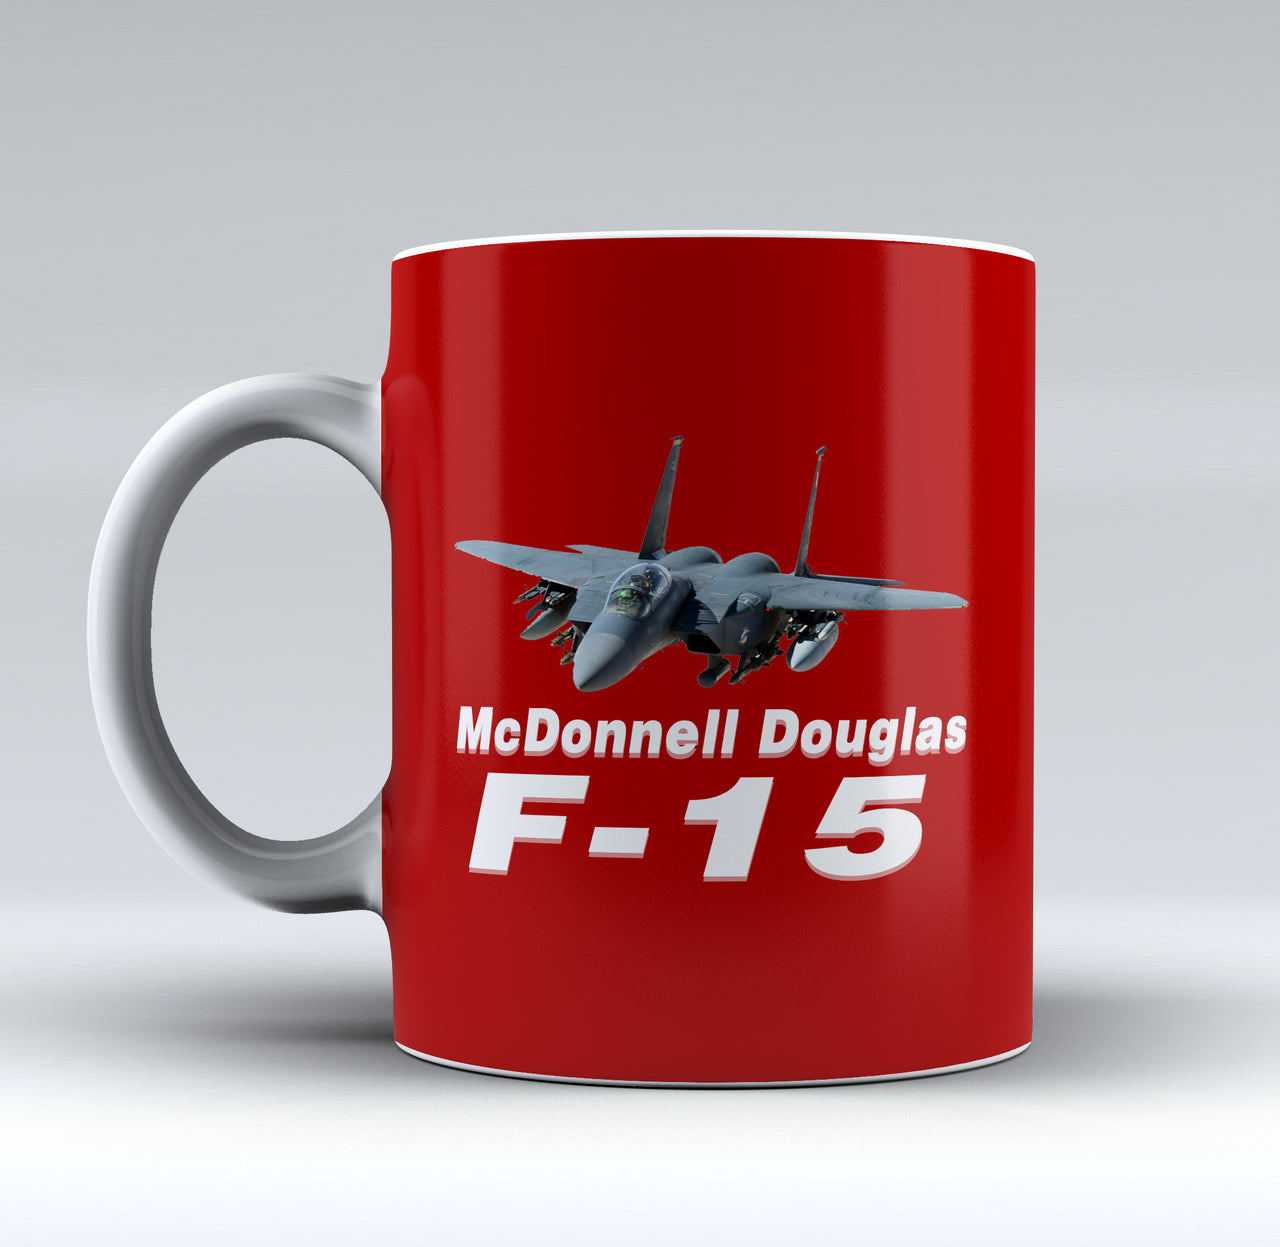 The McDonnell Douglas F15 Designed Mugs